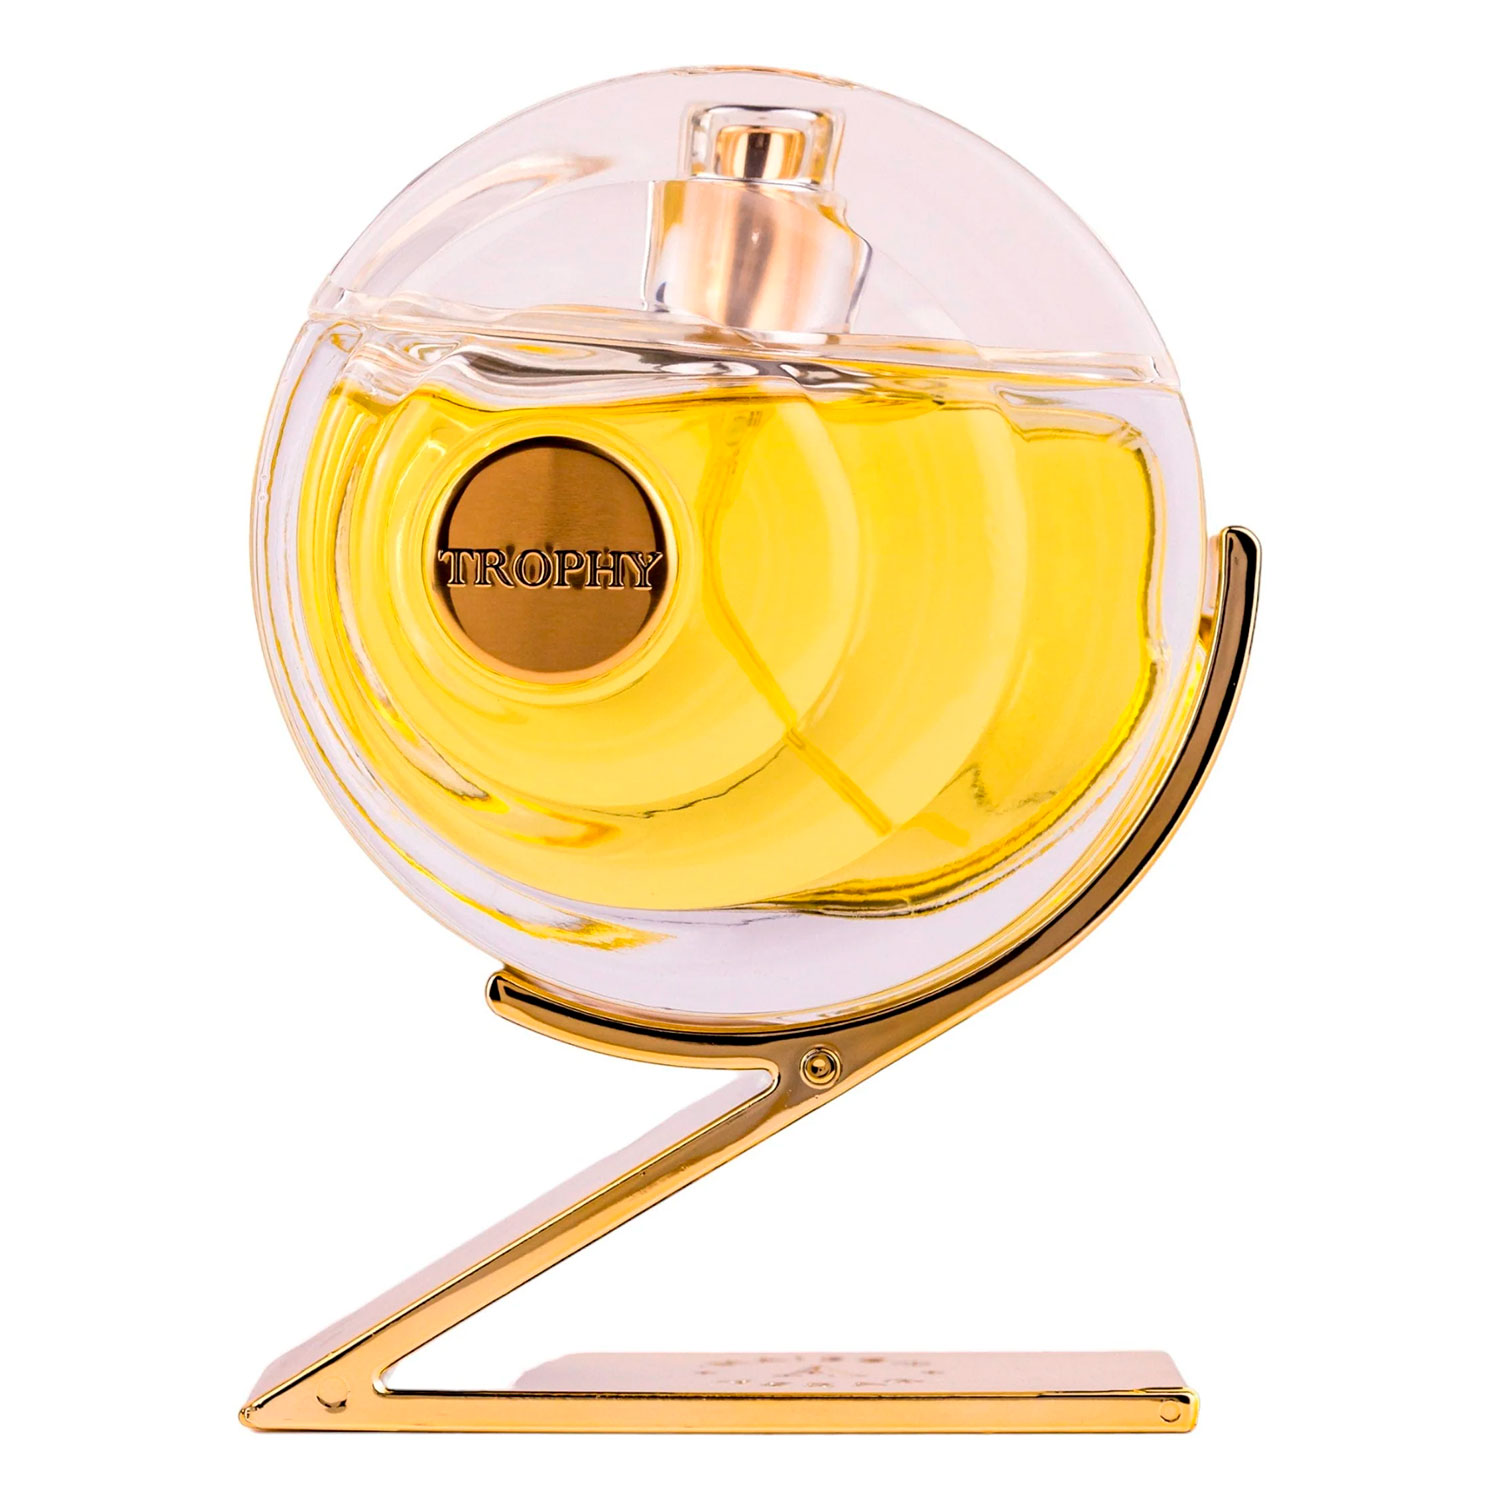 Perfume Maison Asrar Trophy Eau de Parfum Masculino 100ml